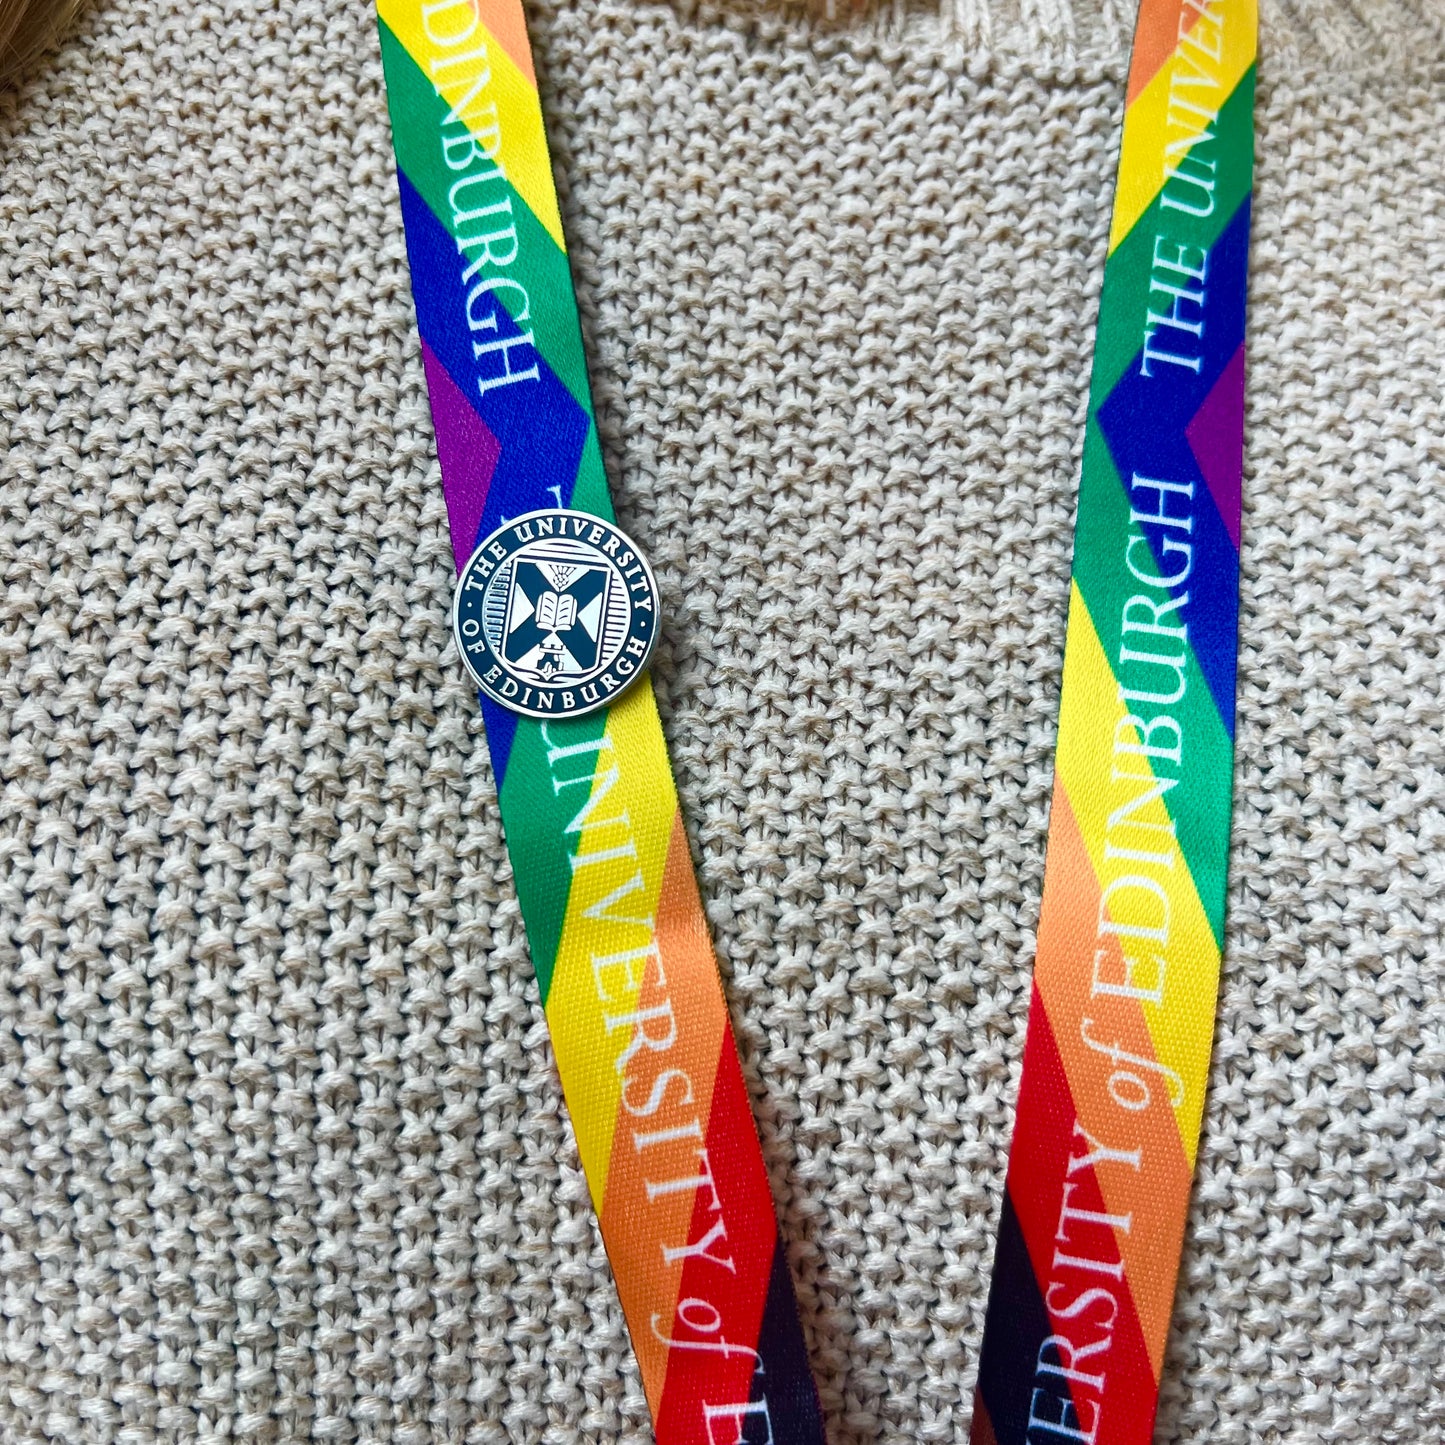 navy and silver crest pin badge on progress rainbow lanyard